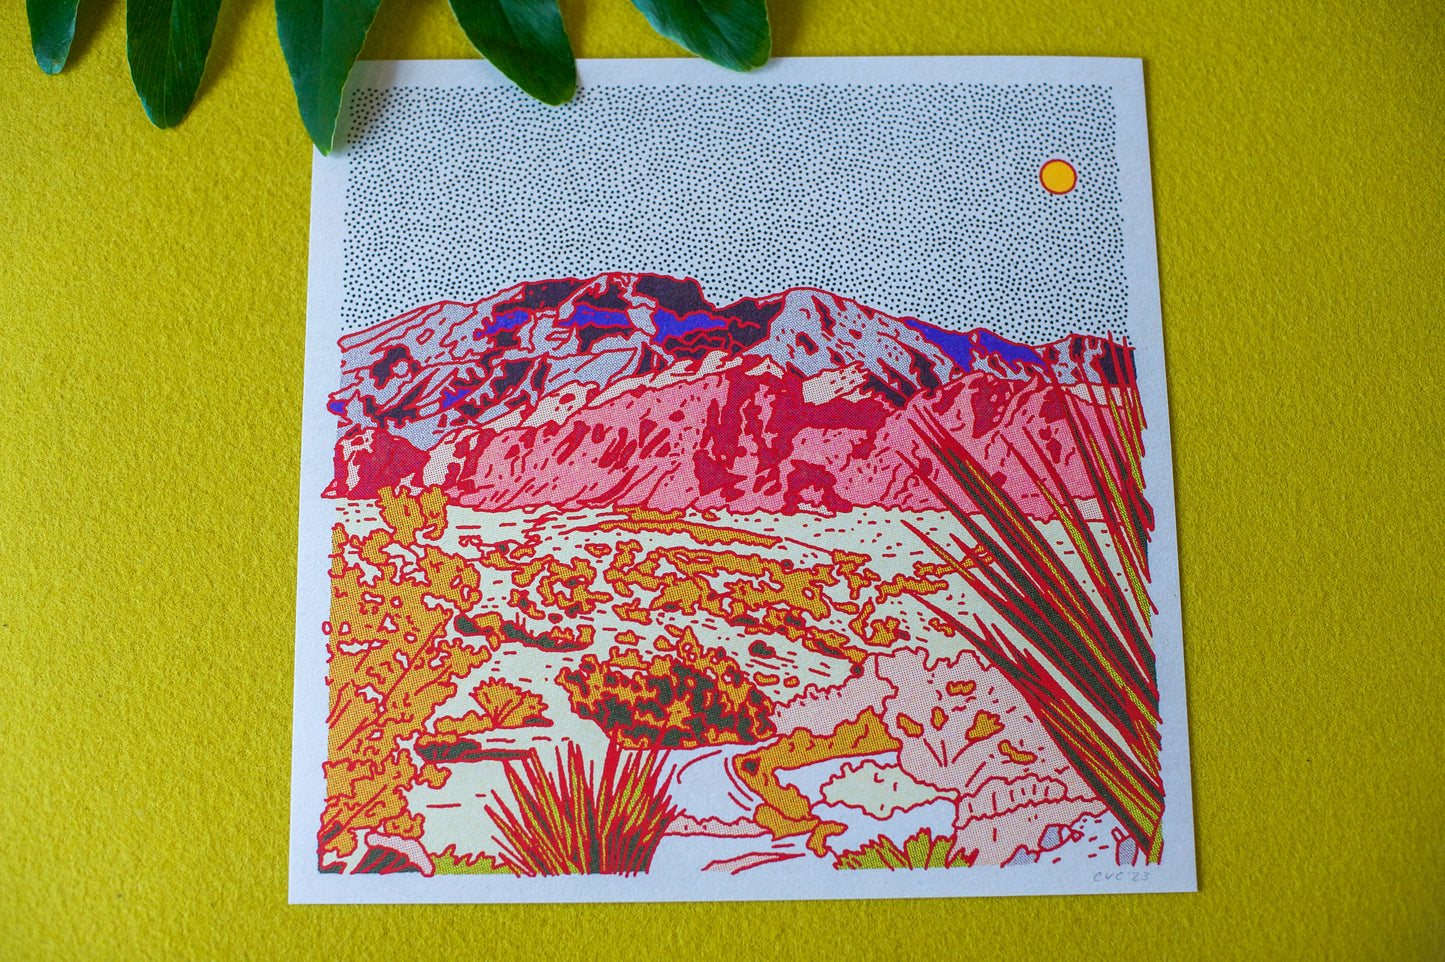 Desert Mountain #21 Print